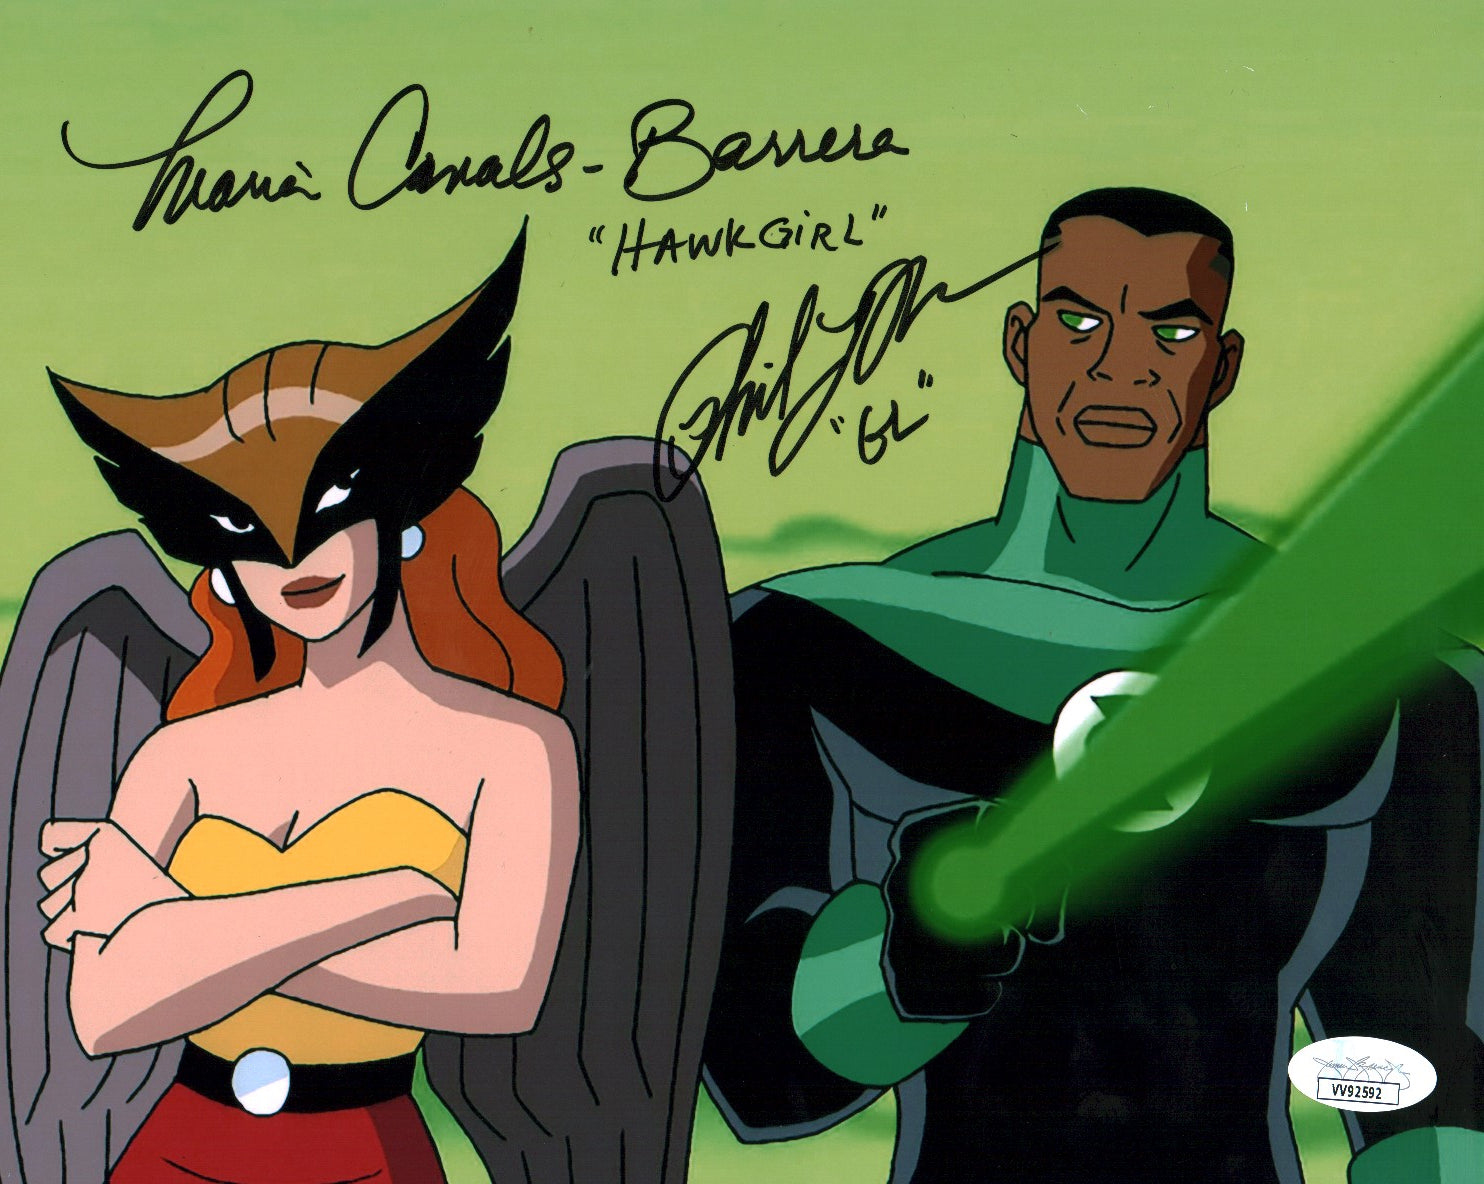 Justice League 8x10 Signed Photo Canals-Barrera LaMarr JSA COA Certified Autograph